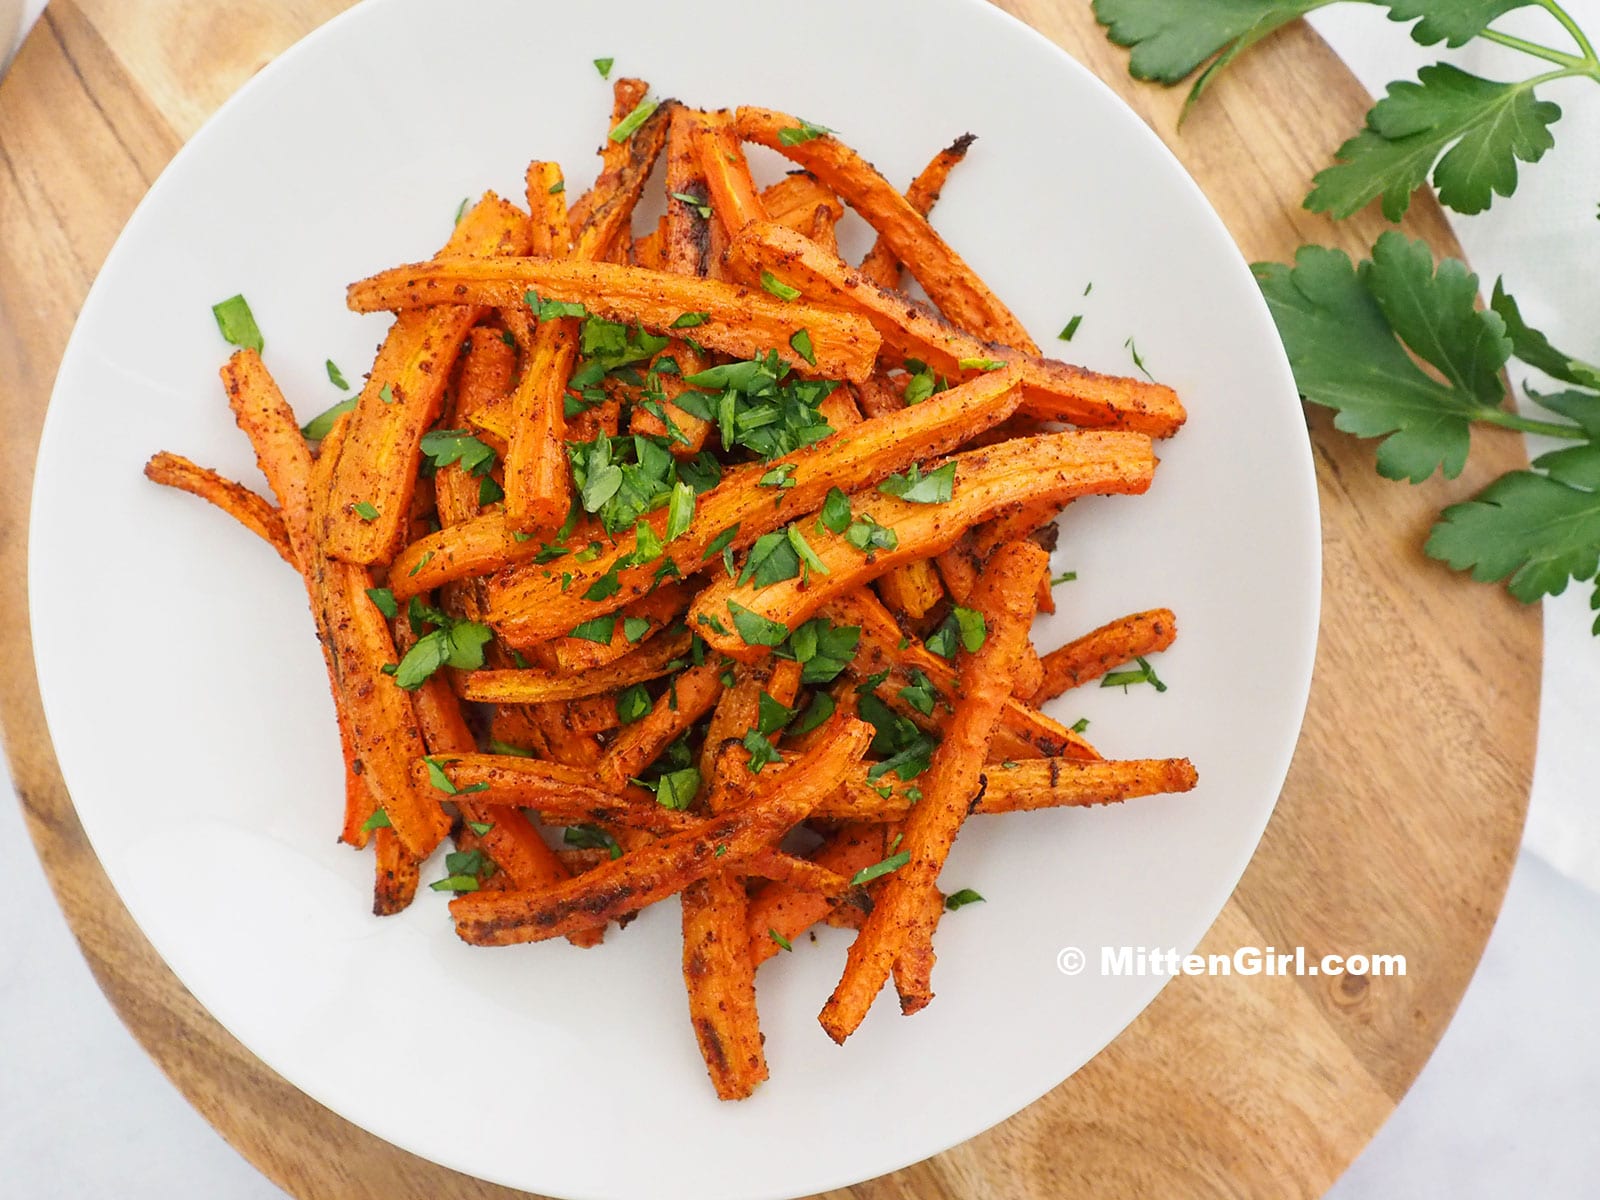 Chili and Garlic Roasted Carrots